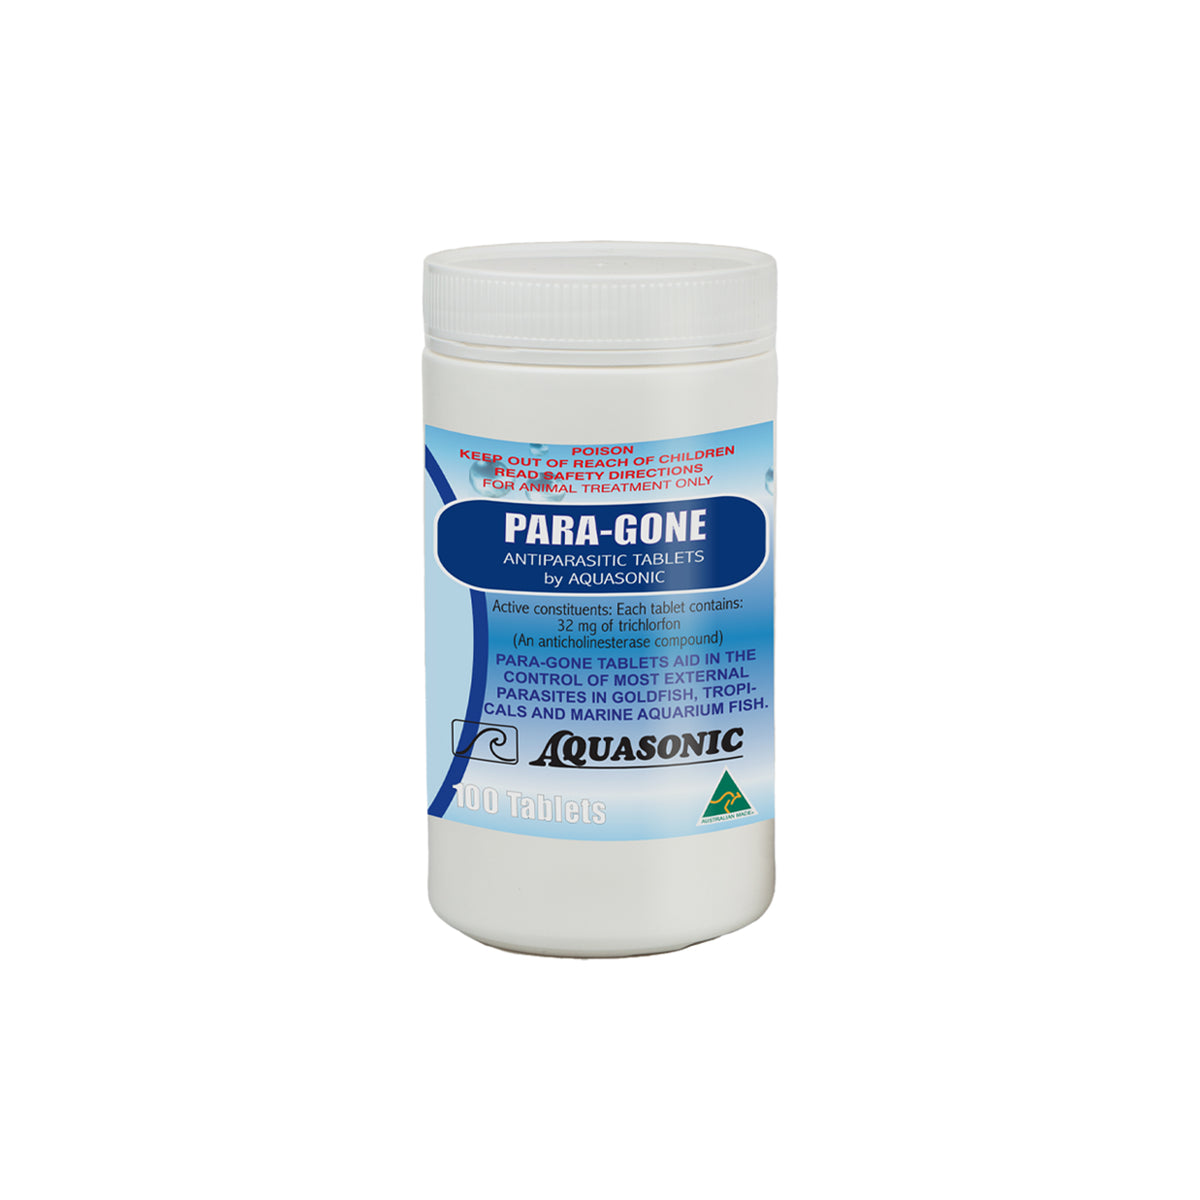 Aquasonic Paragone Anti-Parasitic Tablets